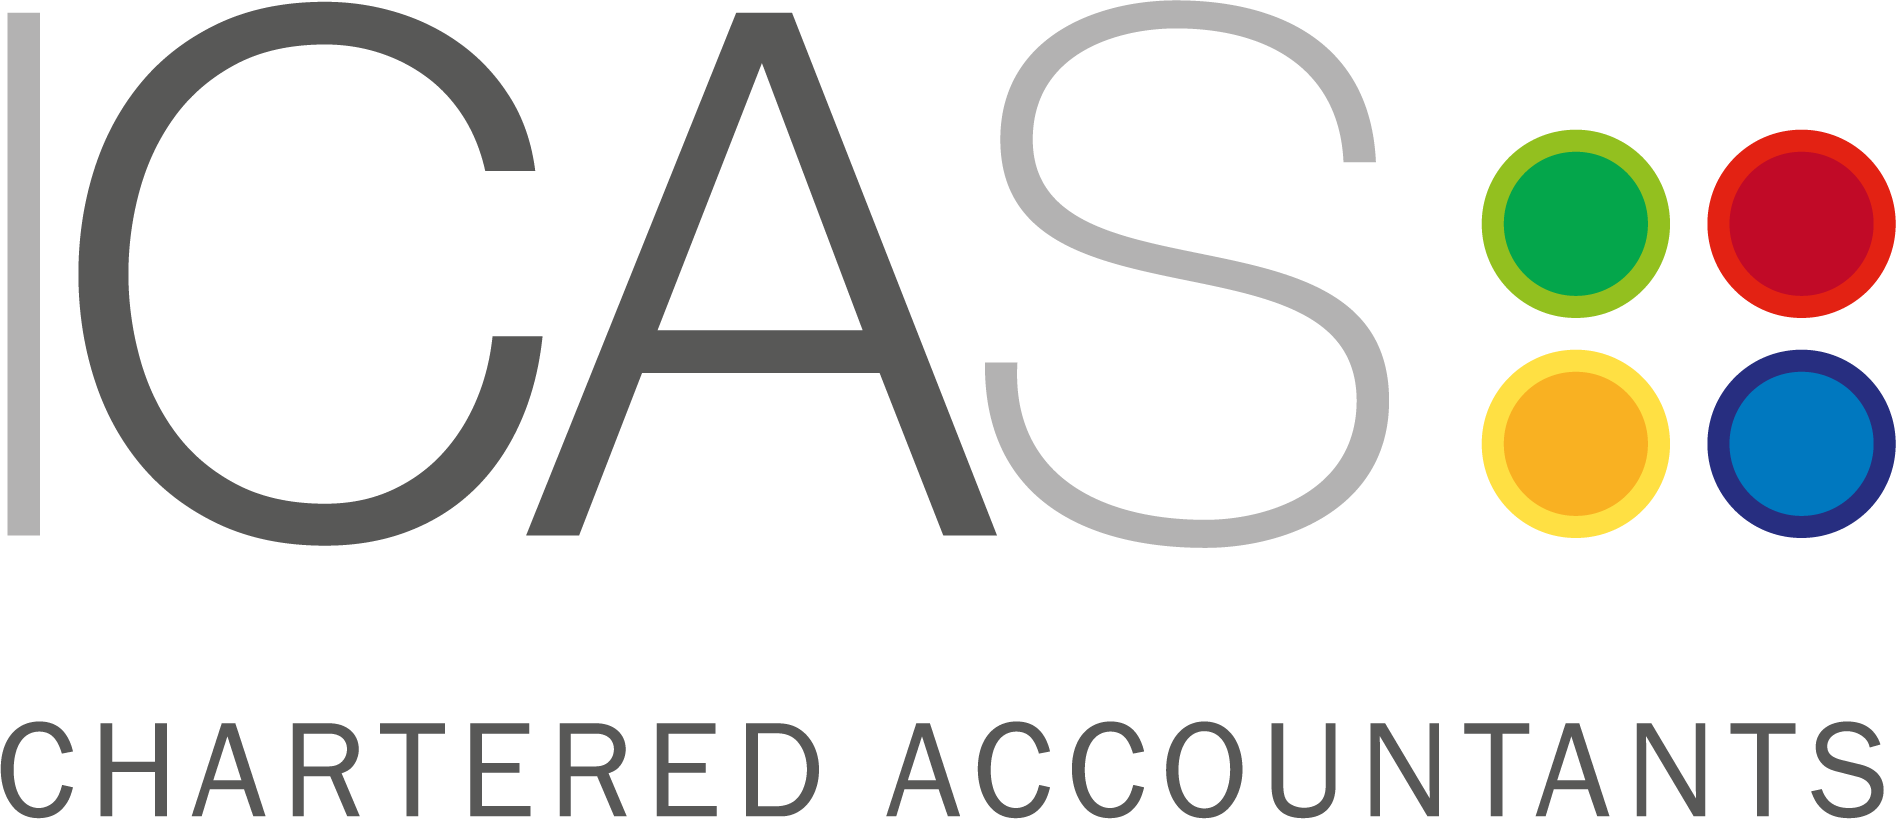 Icas Charterred Accountants Brand Logo